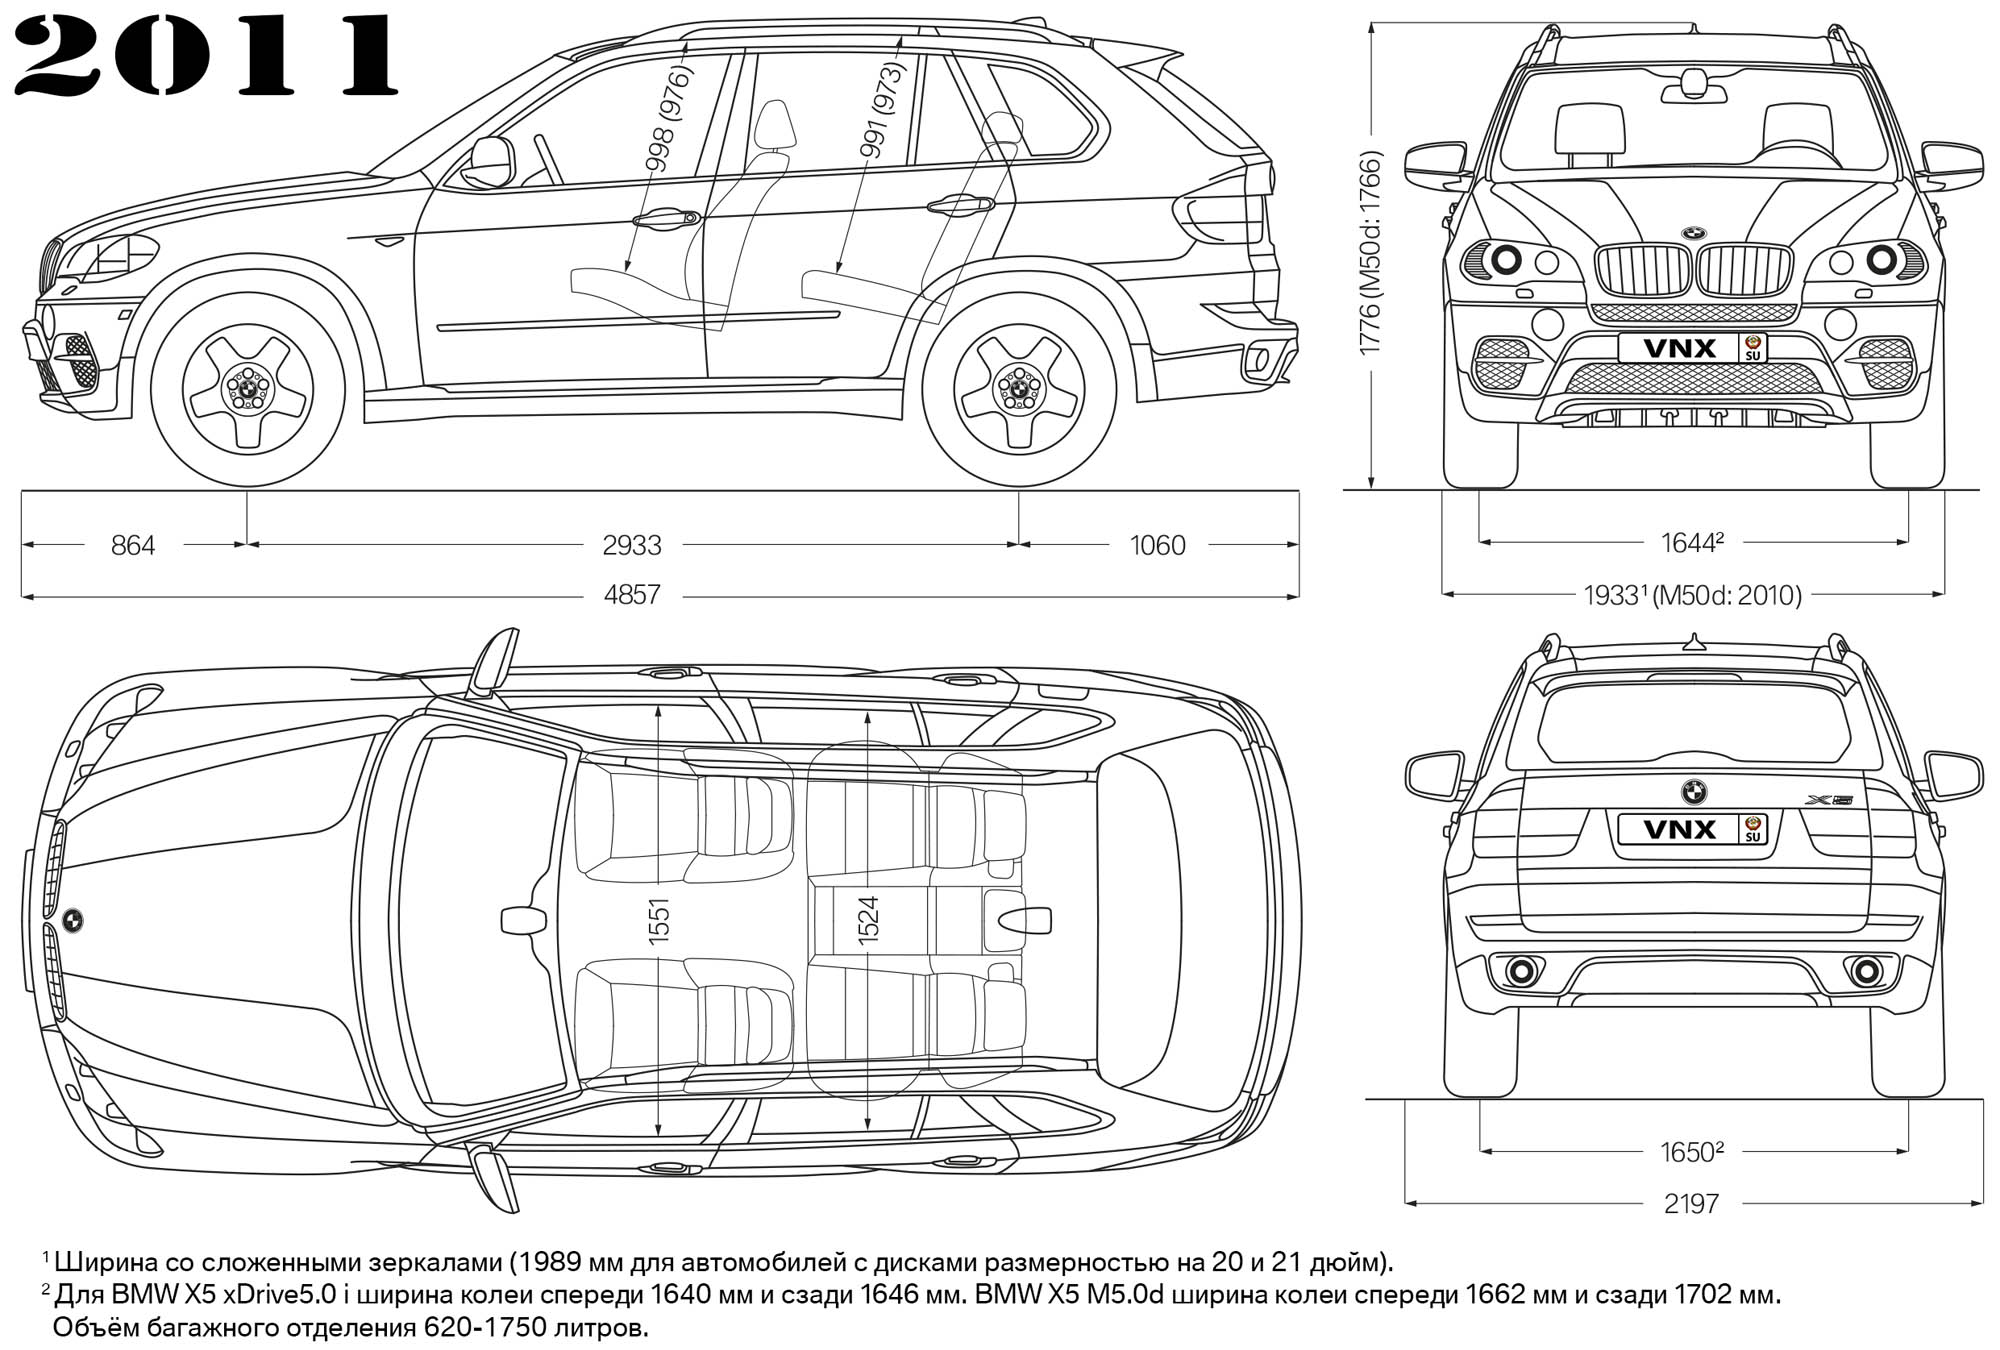 Габаритные размеры БМВ Икс 5 Е70 2011 (dimensions BMW X5 E70 restyling)